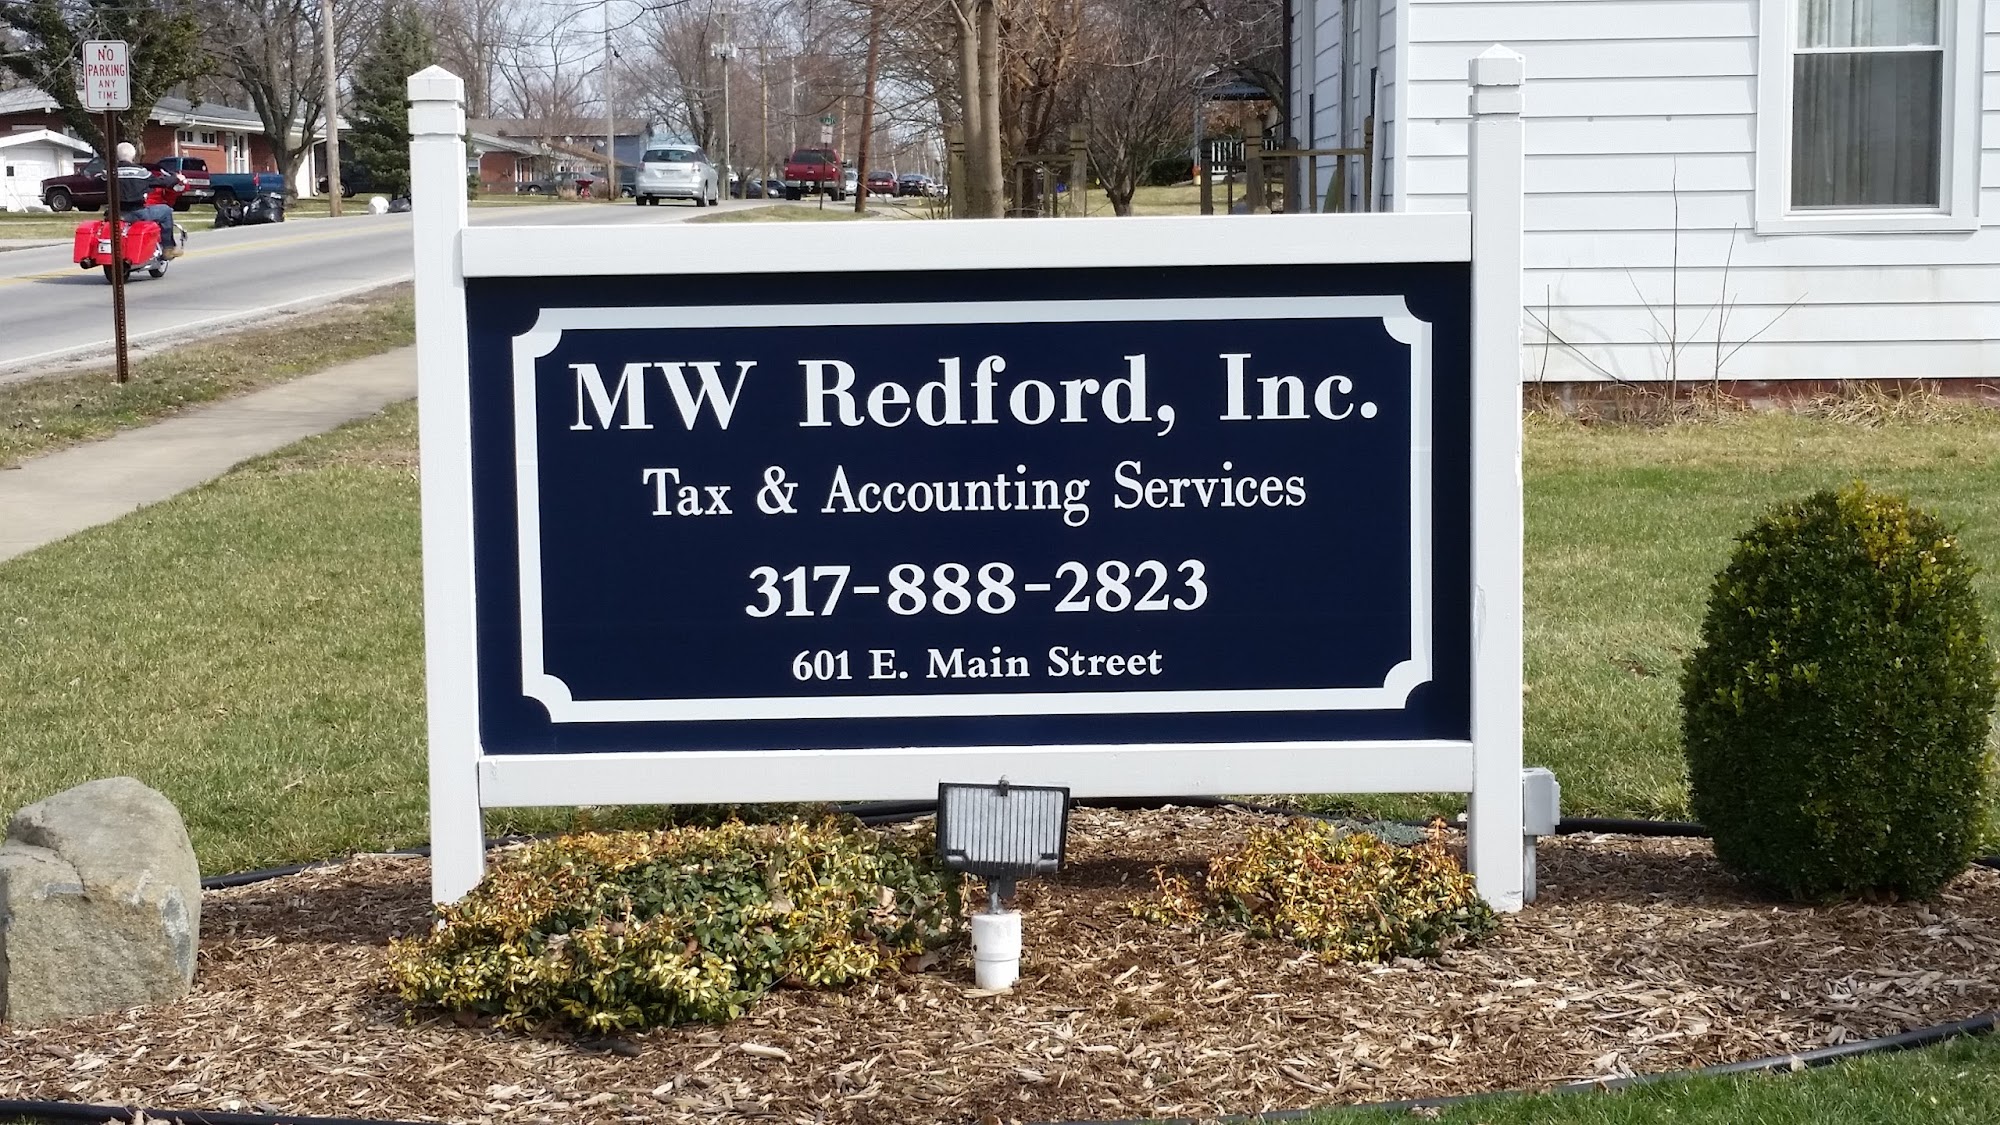 Michael W Redford Tax & Accounting